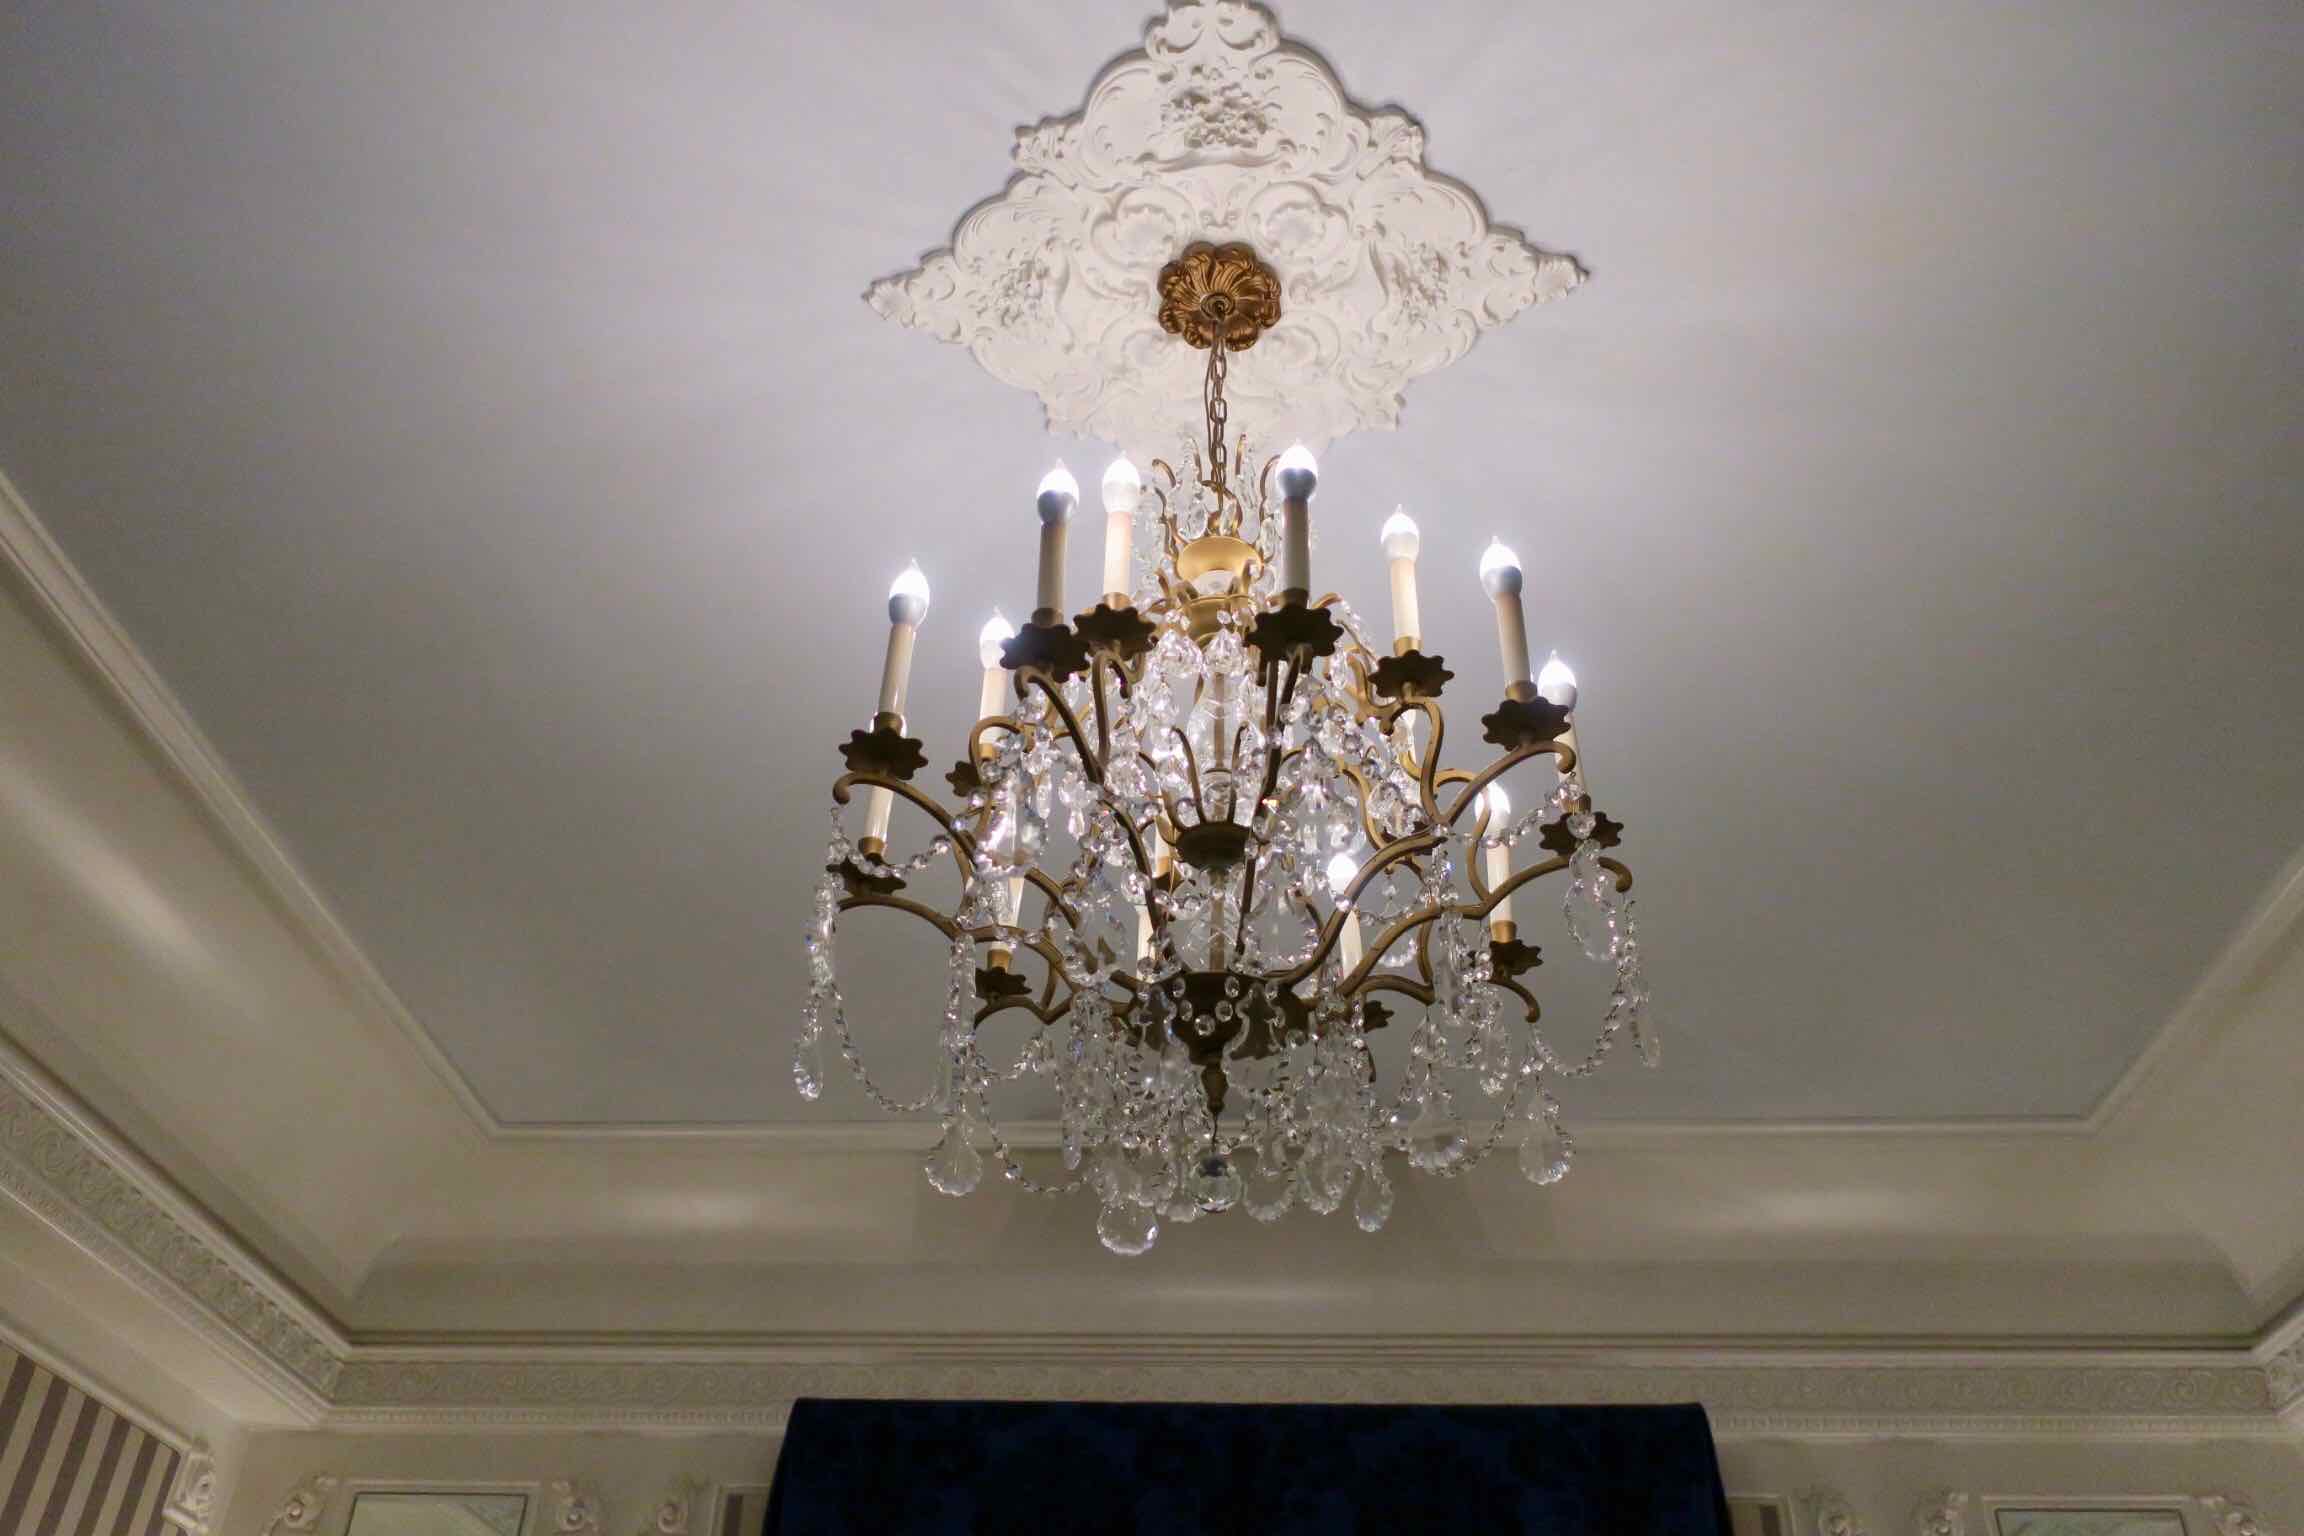 The St. Regis New York Superior Room chandelier